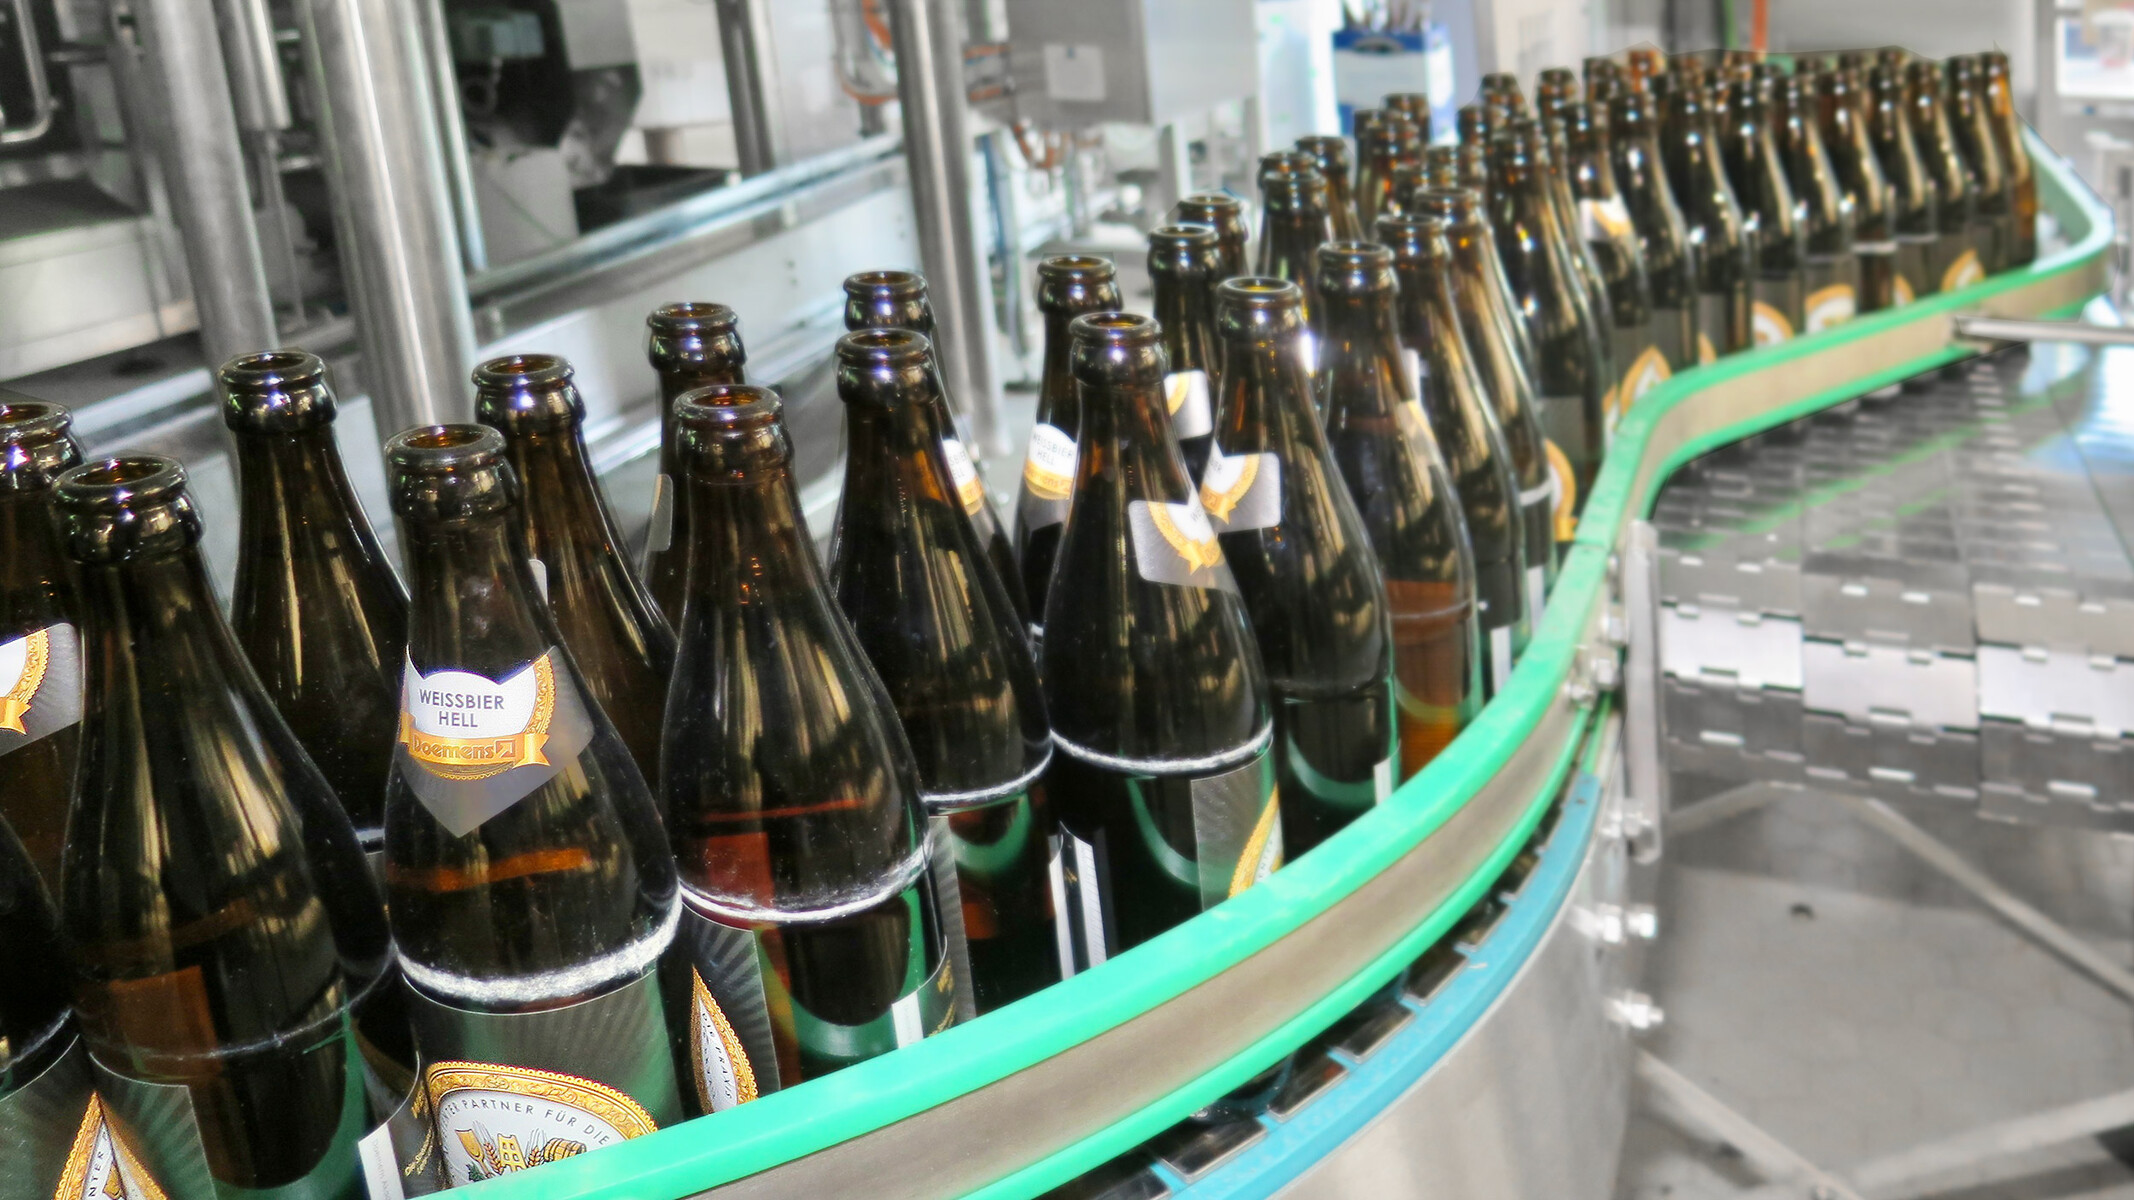 Beer bottling plant in the Doemens Academy